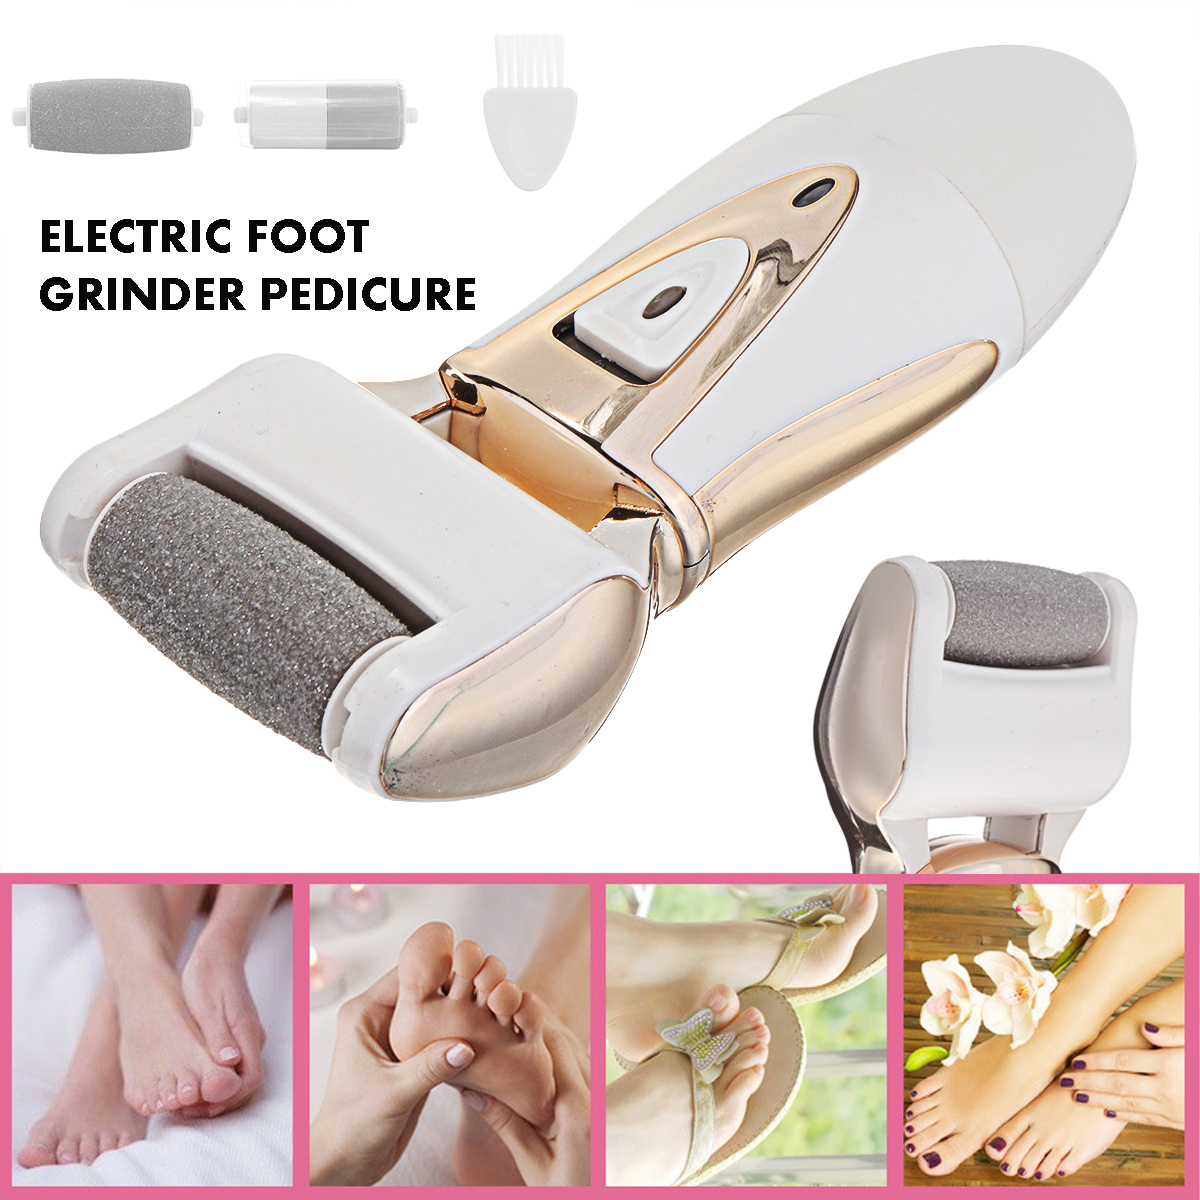 Electric-Foot-Grinder-Pedicure-File-Machine-Dead-Skin-Care-Callus-Remover-Tool-1721373-2